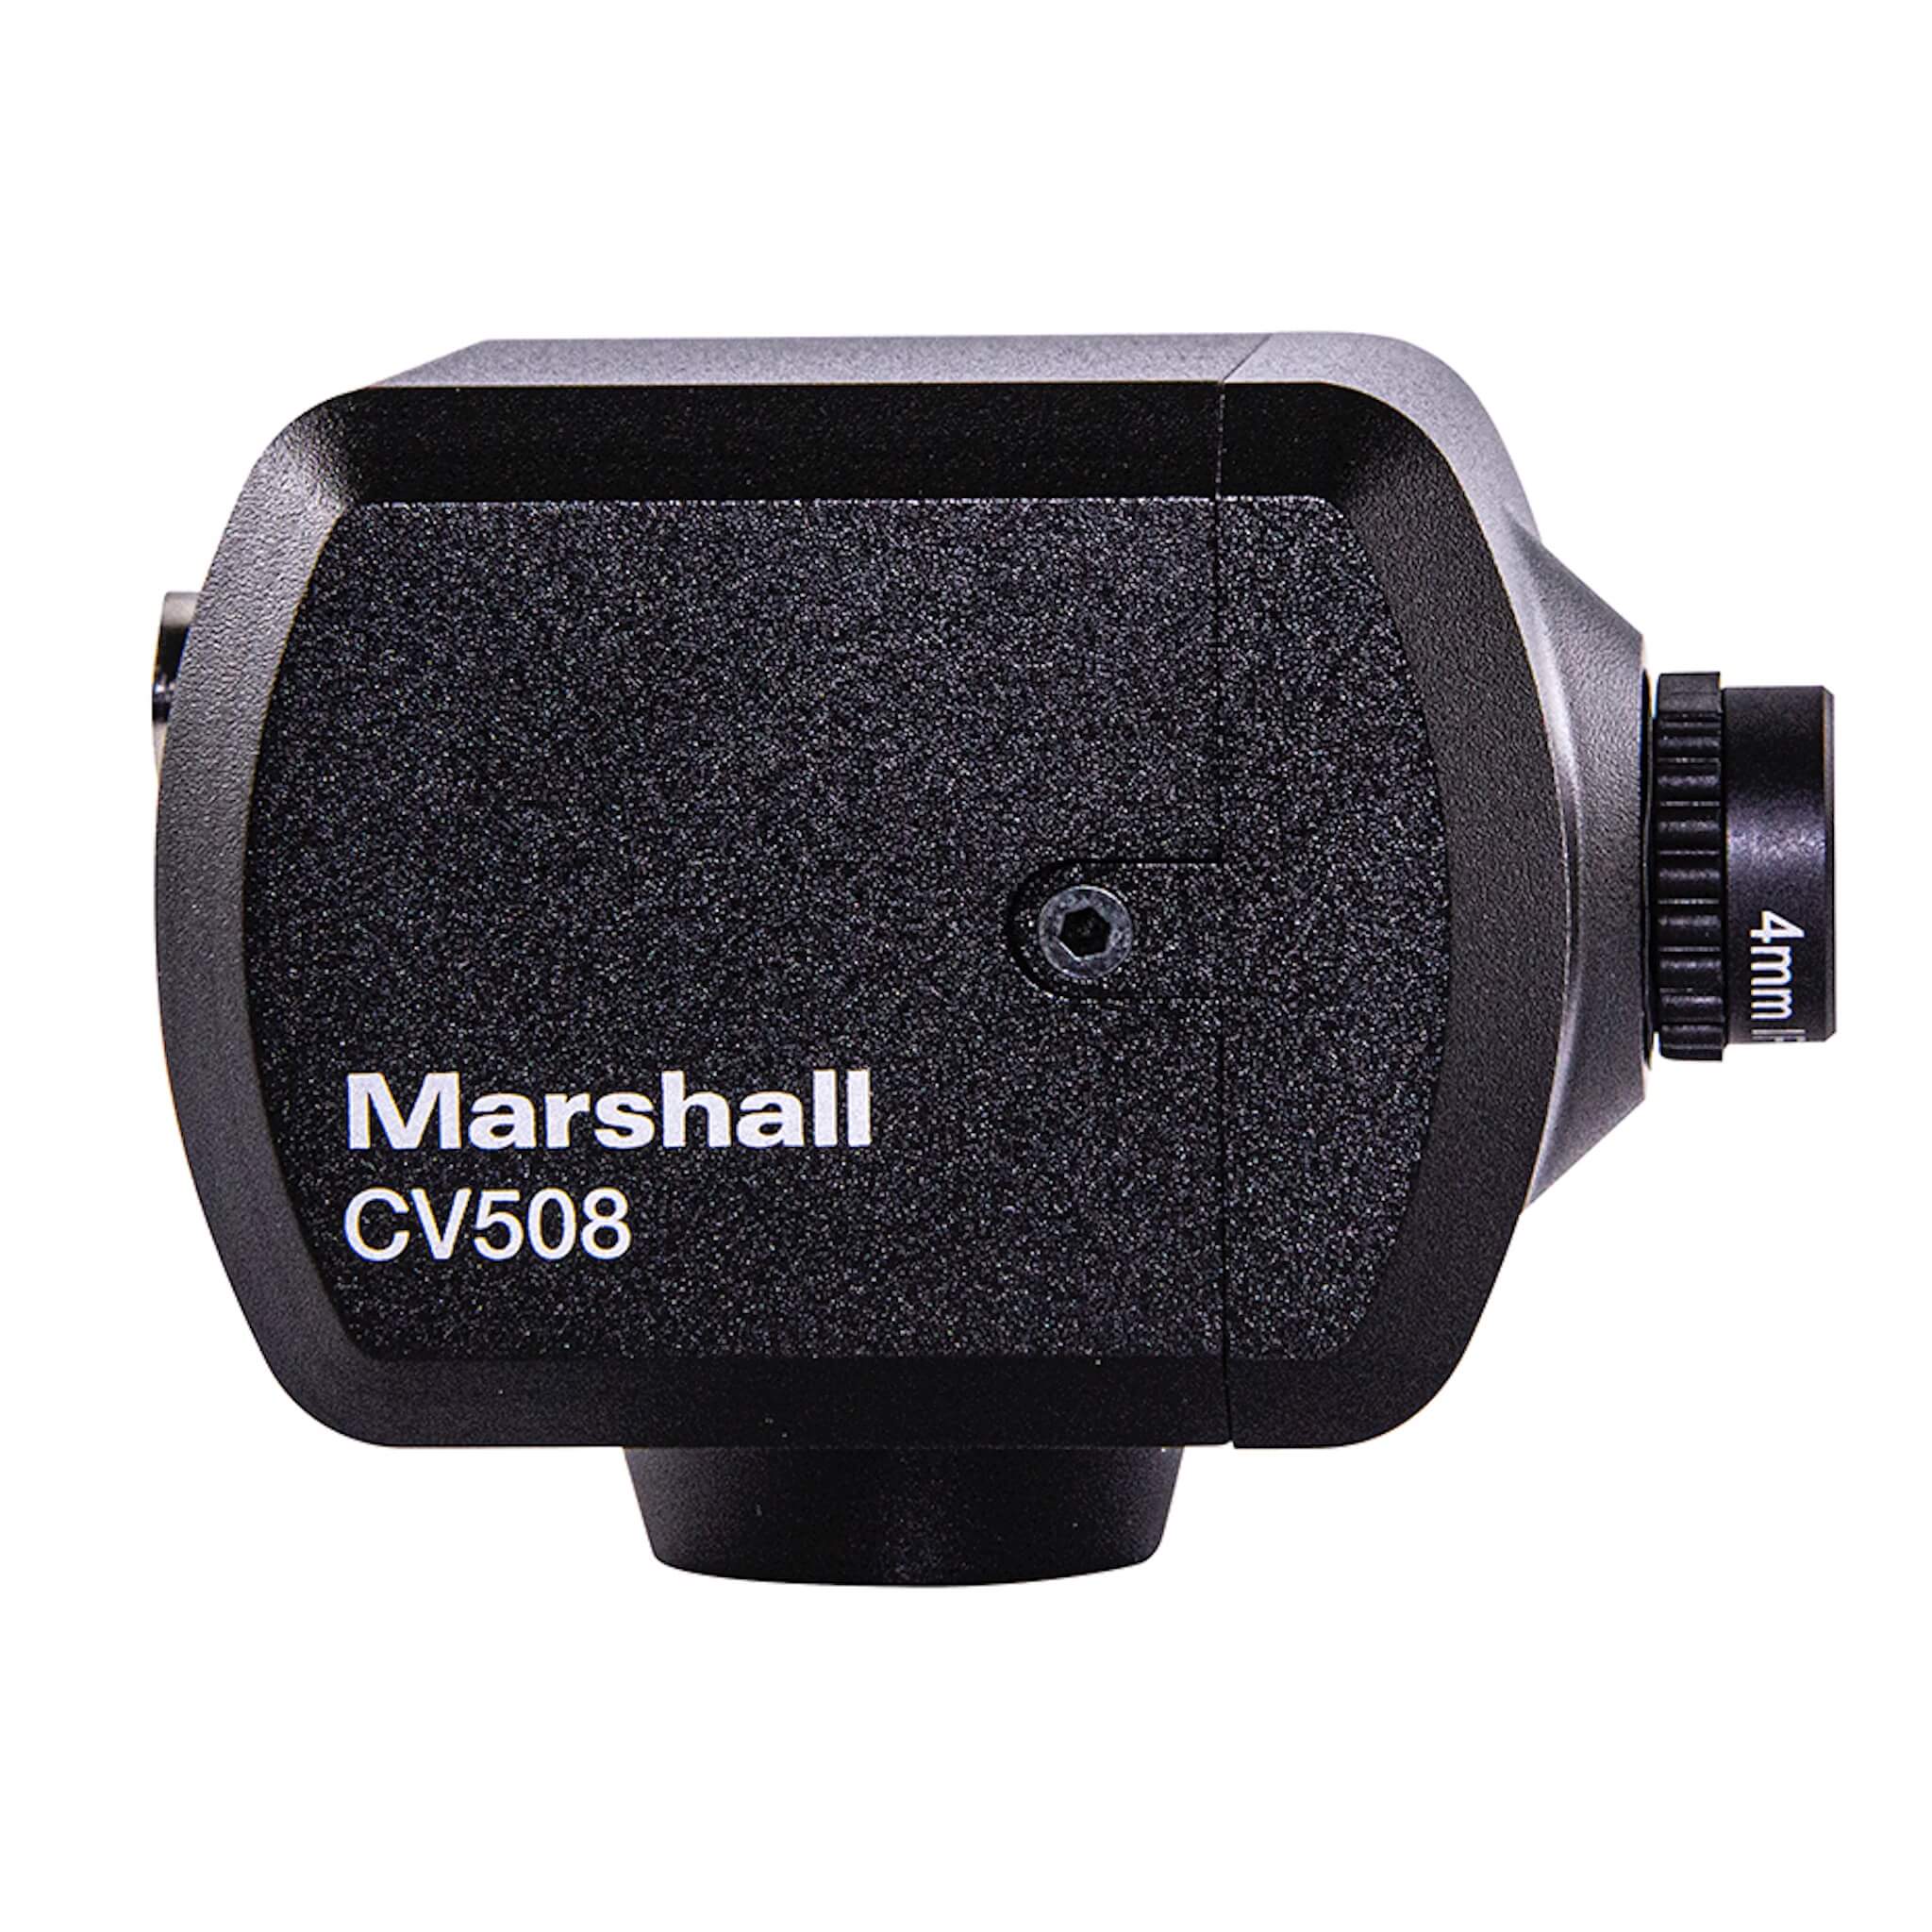 Marshall CV508 - Micro Full-HD POV Video Camera with HDMI/3GSDI, right